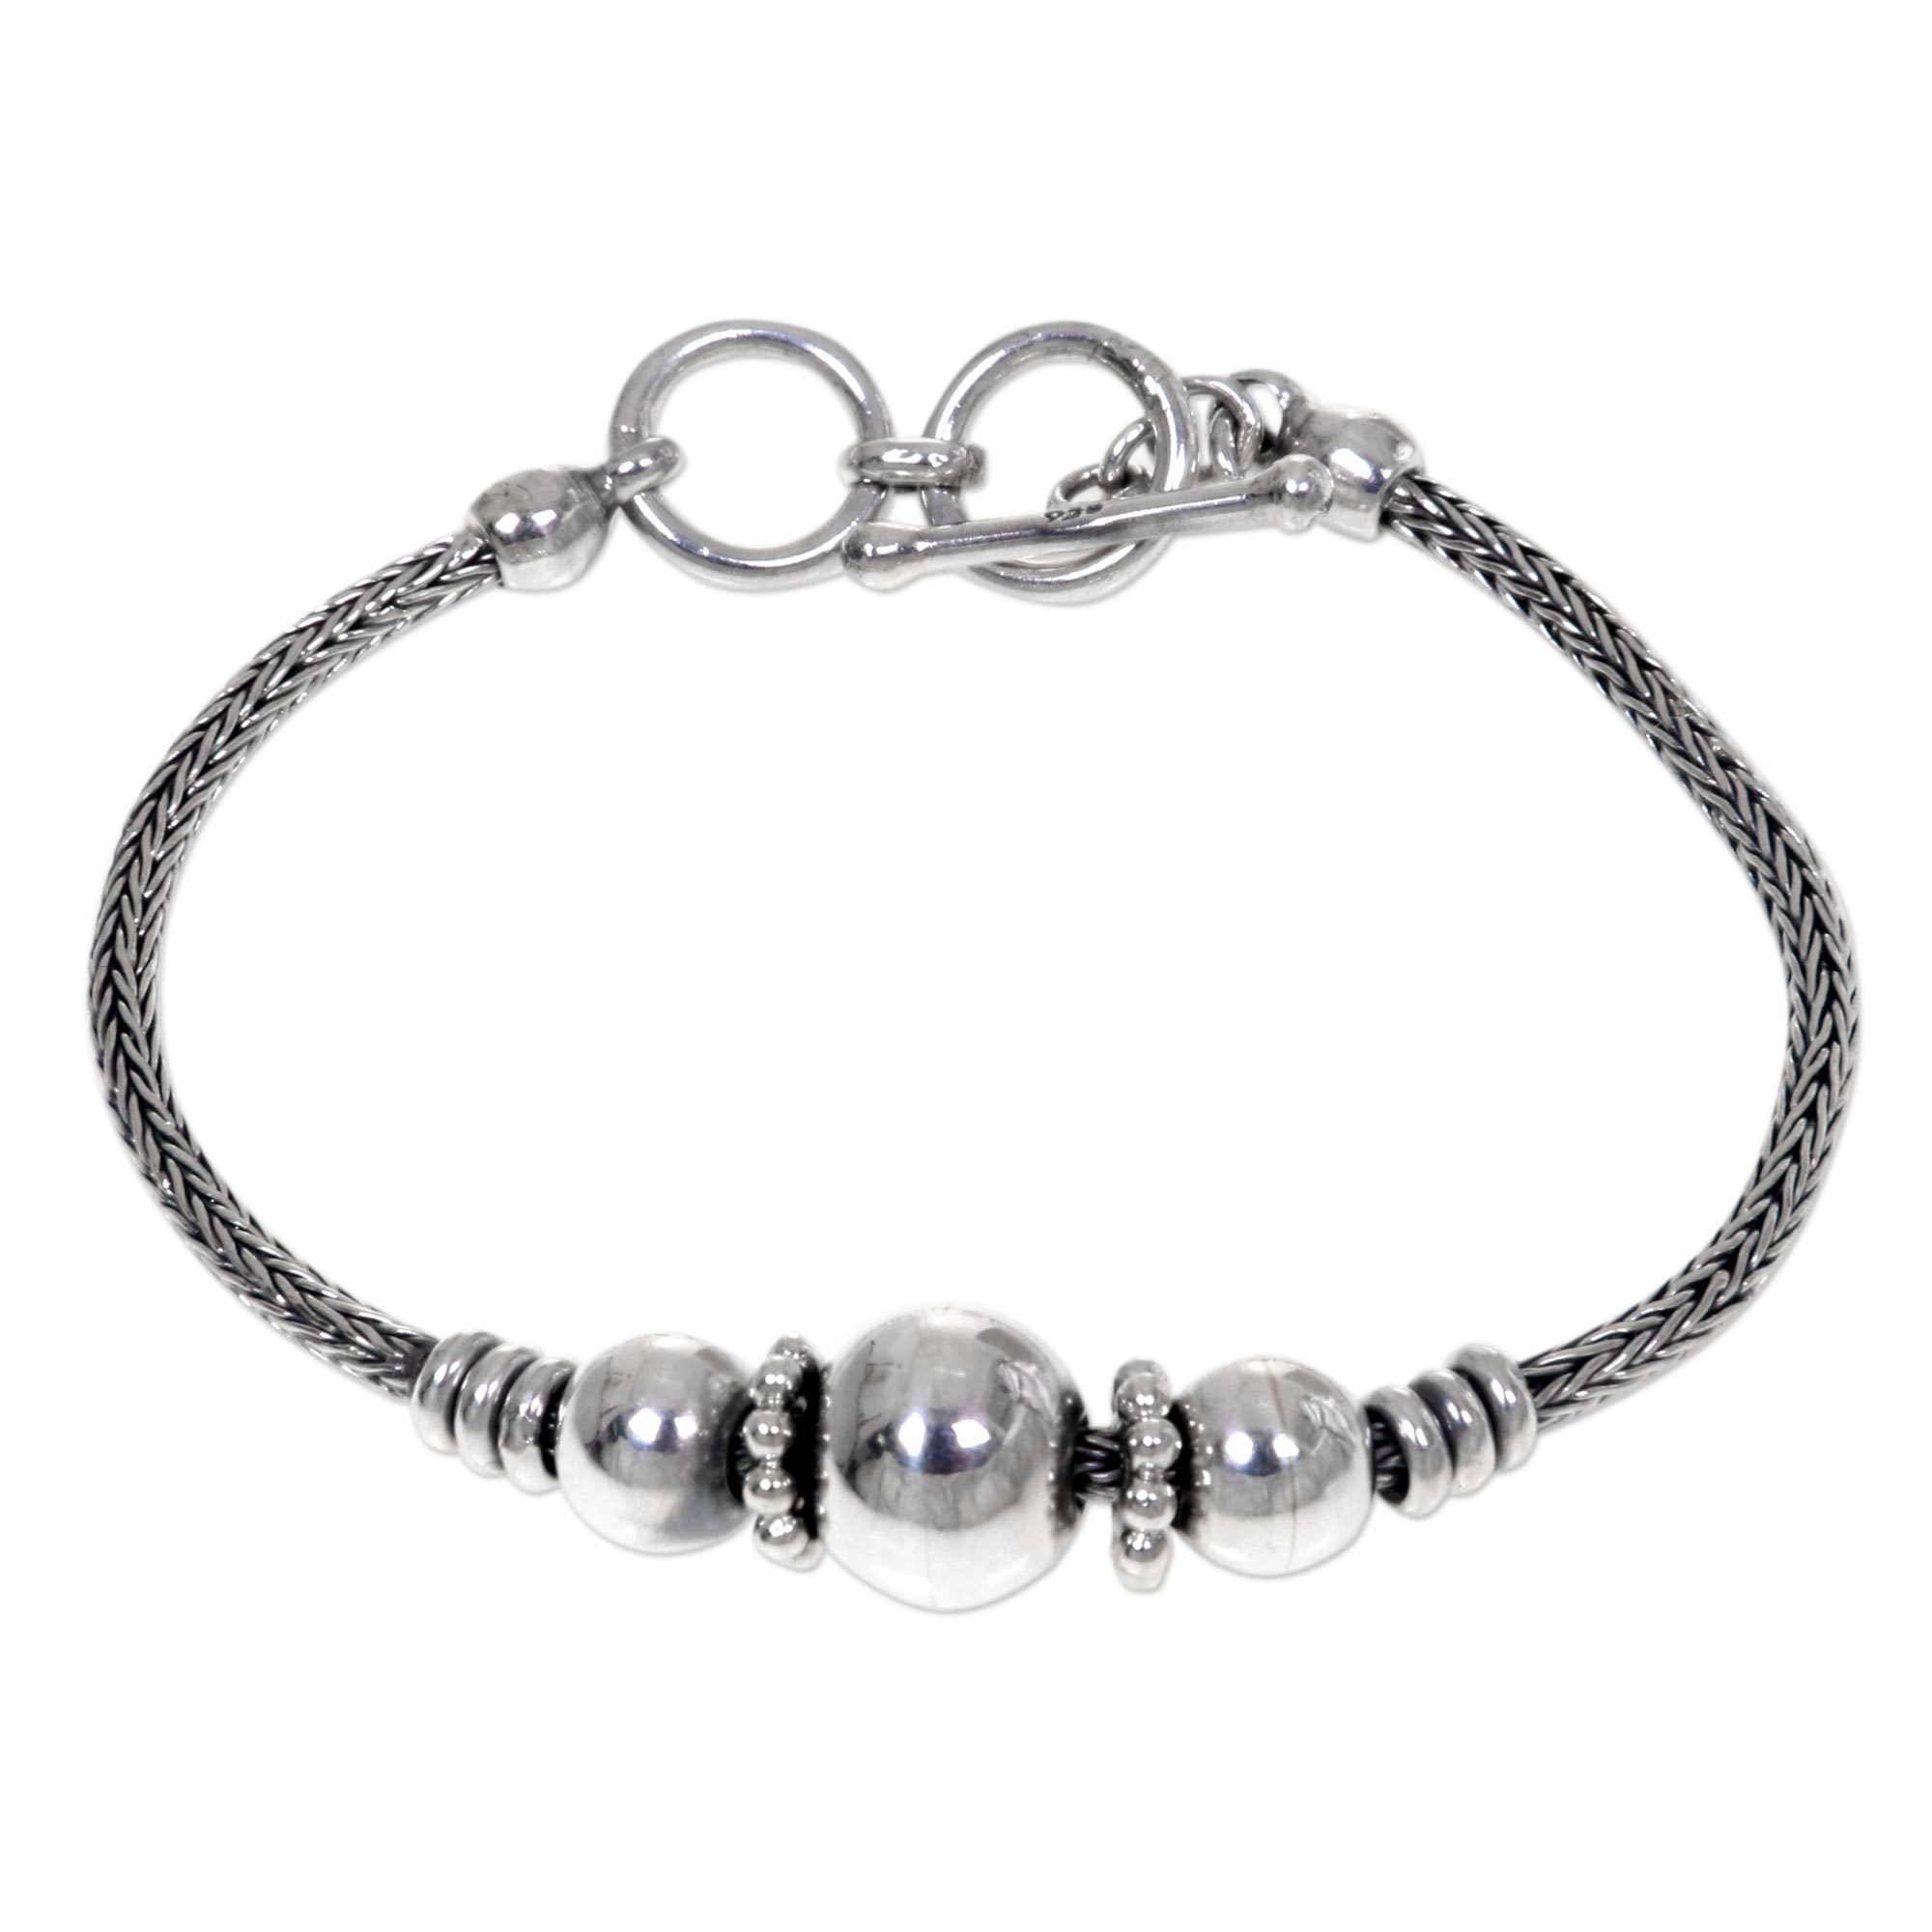 Naga Chain Sterling Silver Bracelet with Ball Pendants - Naga Trio | NOVICA